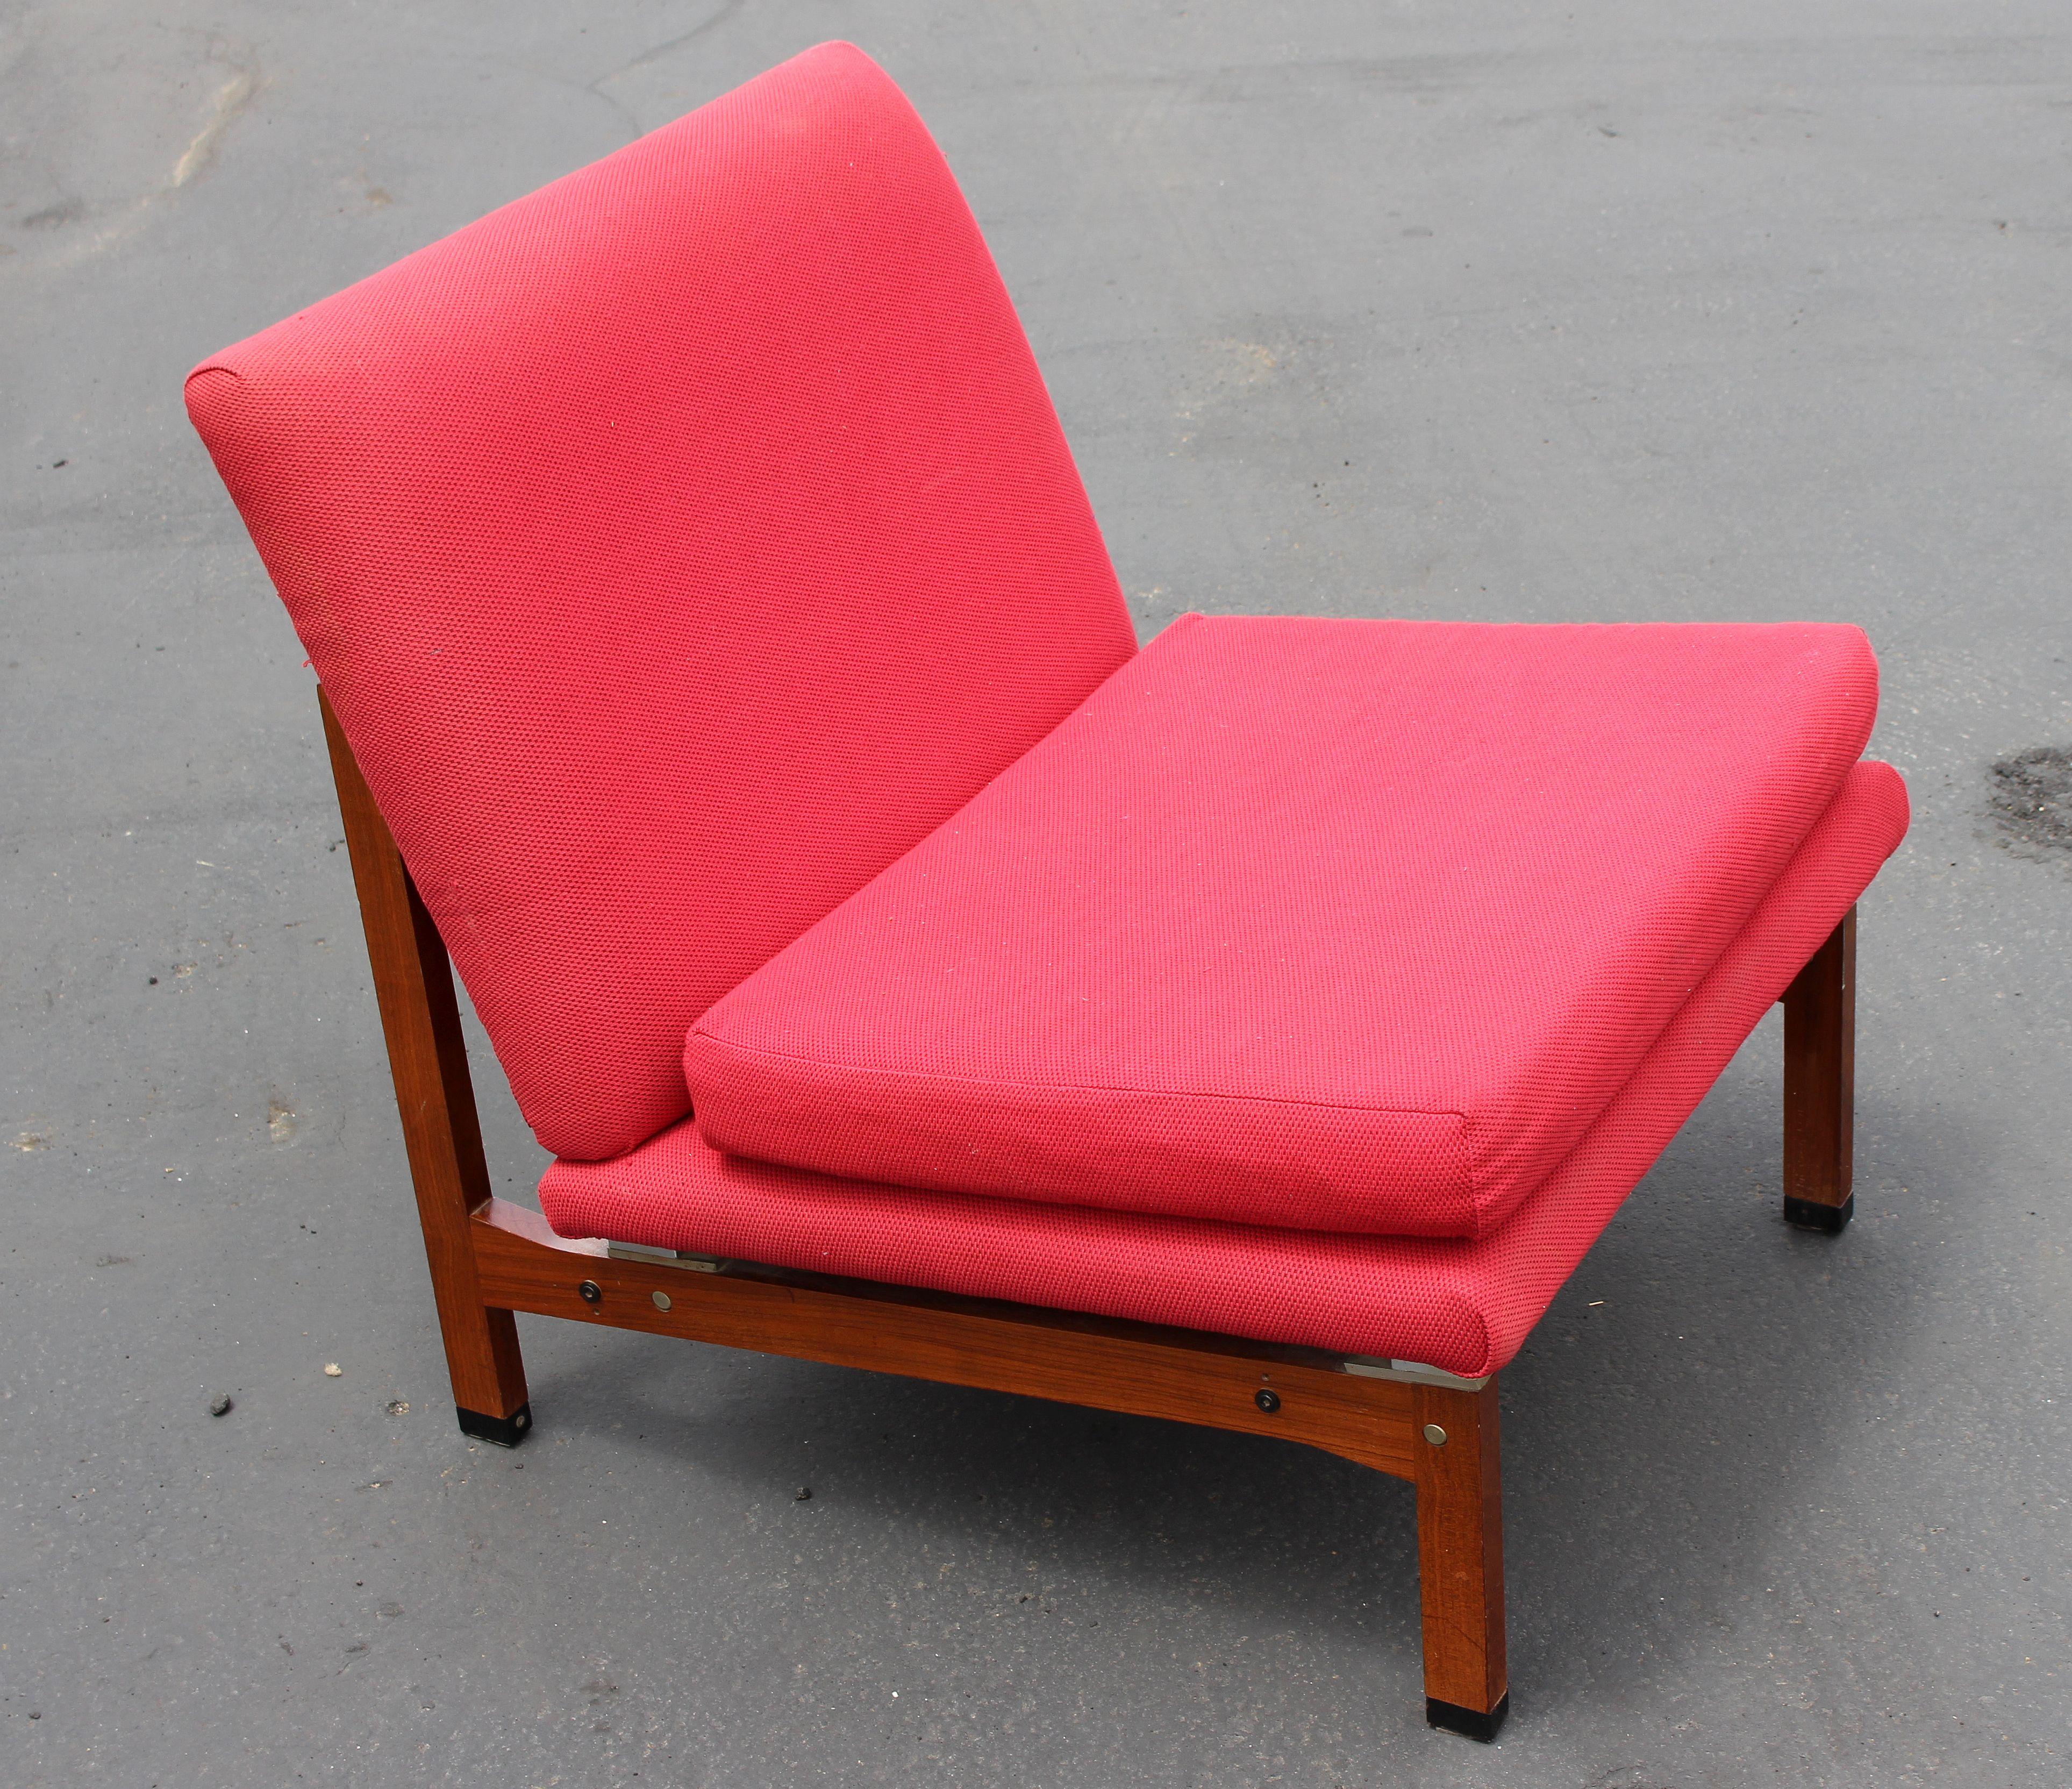 Ico Parisi set 1960s period in original condition. Rosewood base and original Mim upholstery